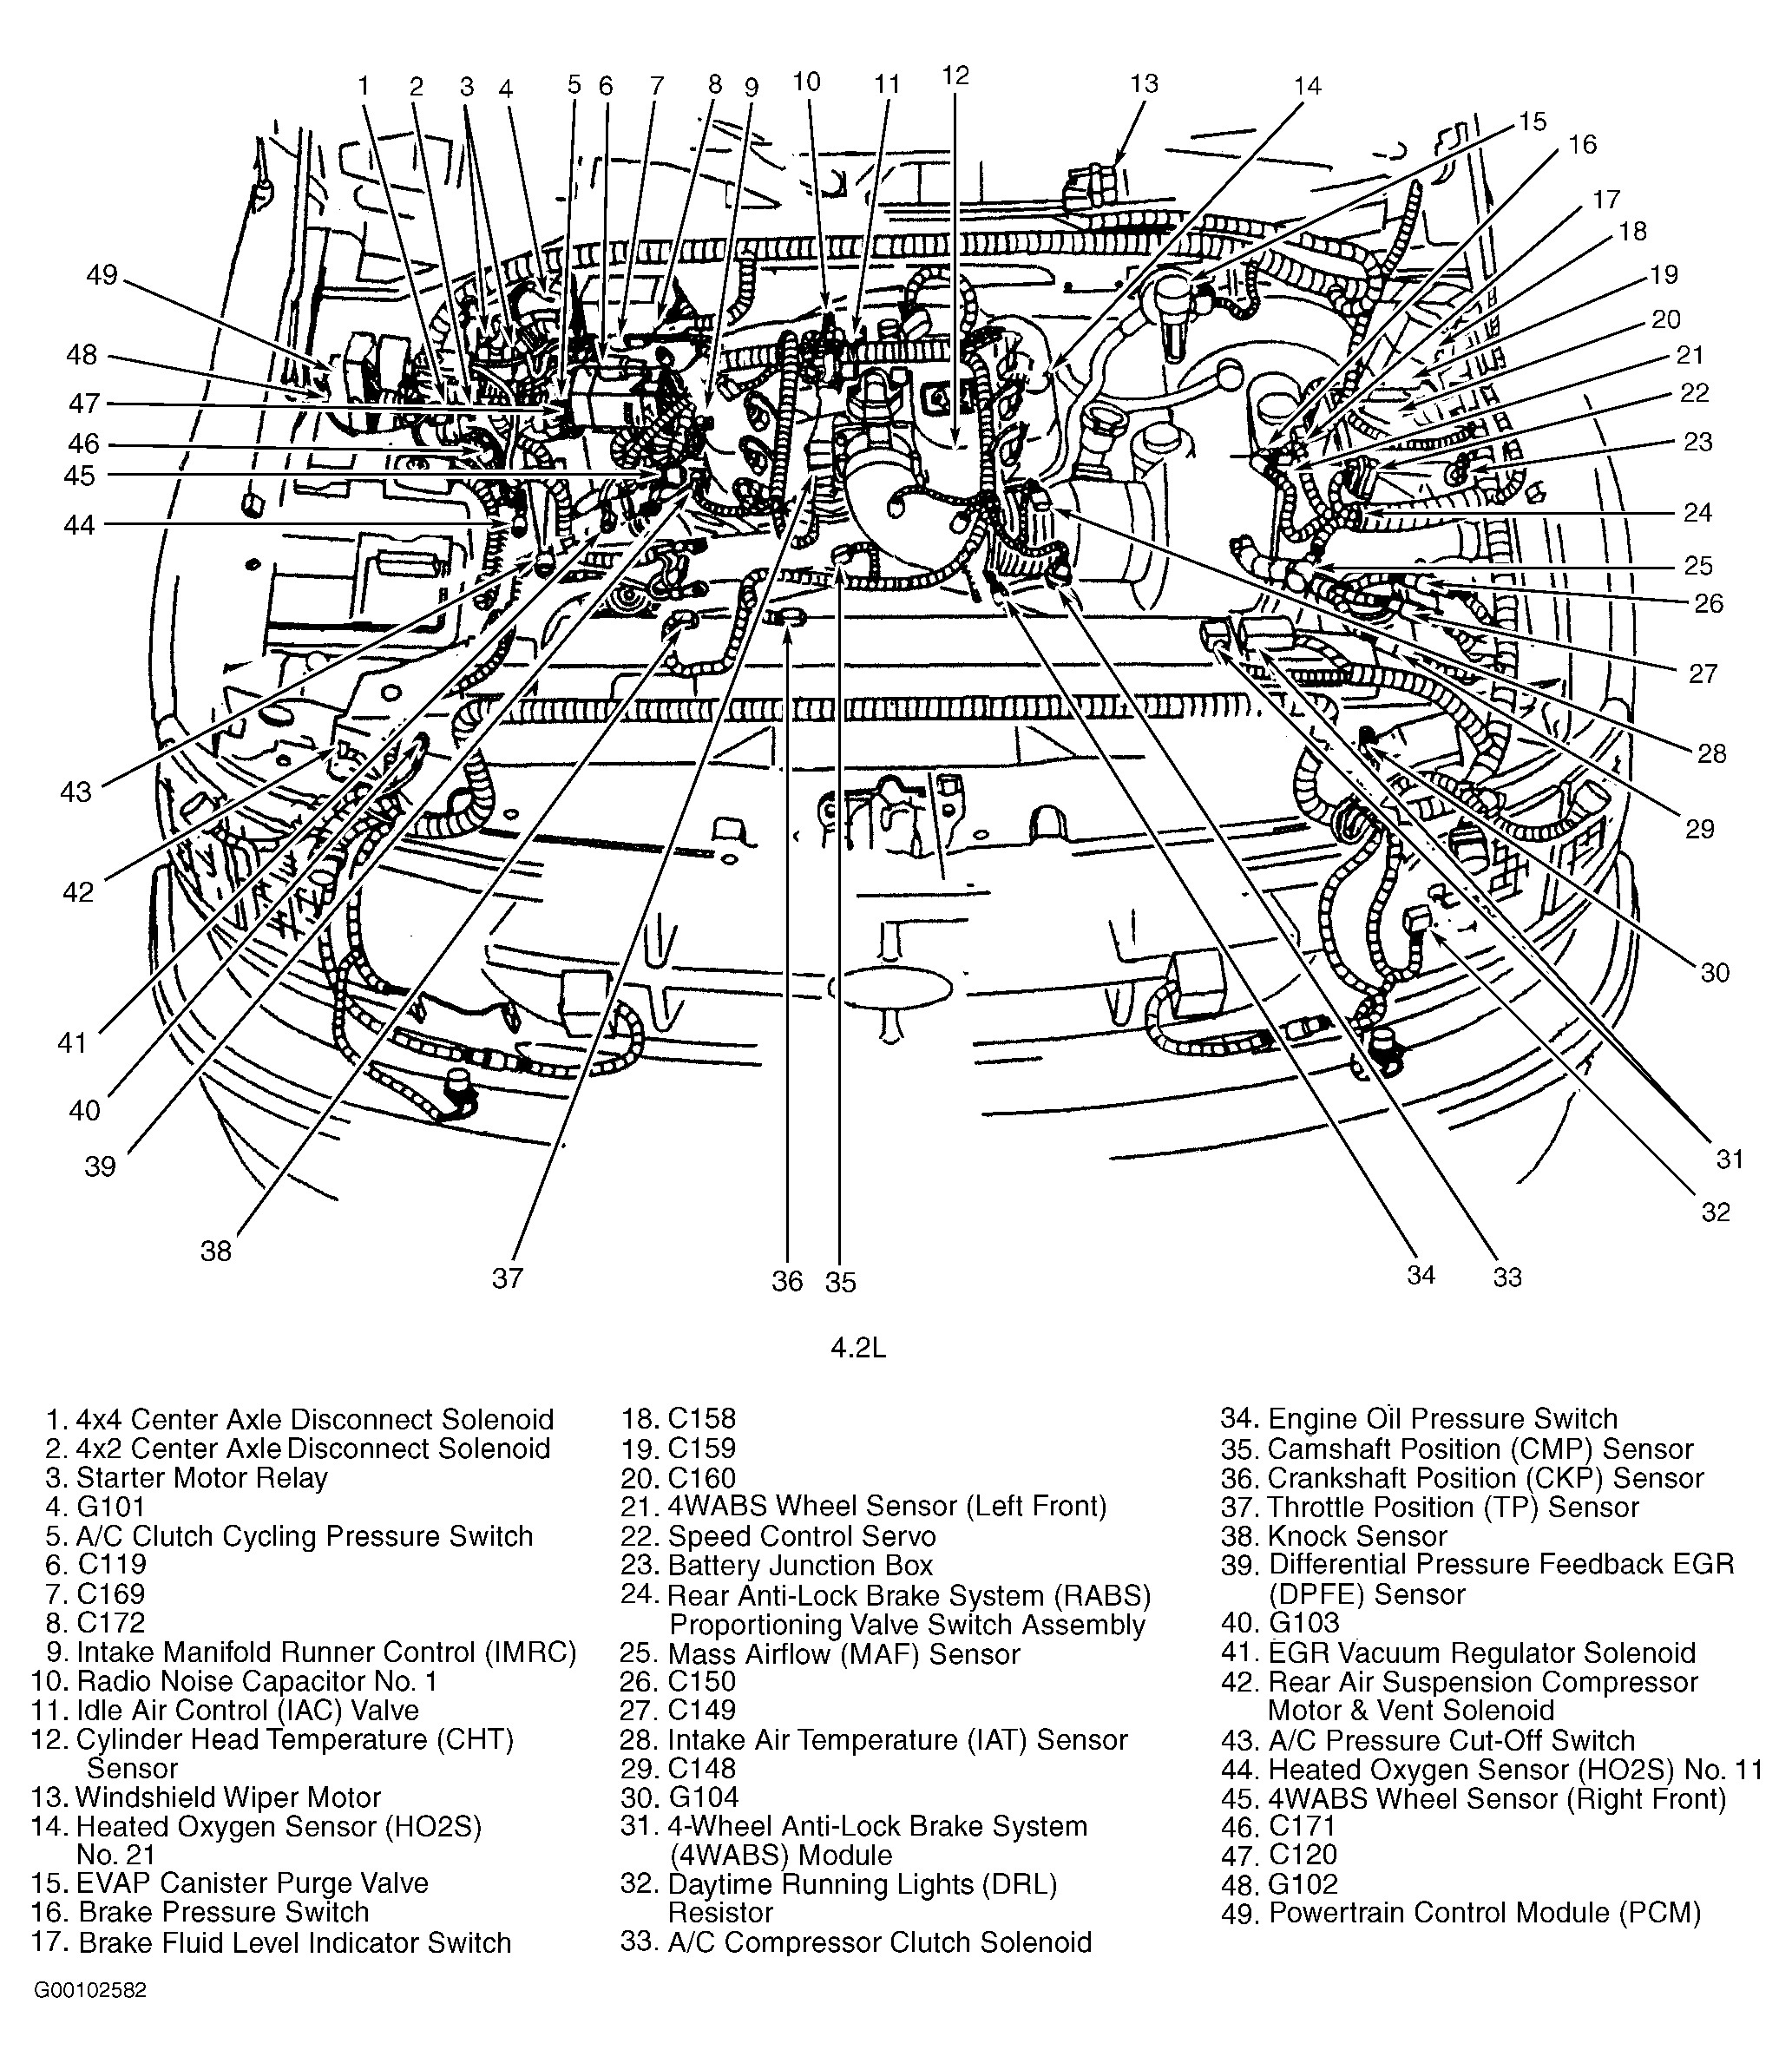 Fuse Diagram for 2001 ford F150 4.2 Liter Wiring ford F 150 4 2 V6 Engine Diagram Full Quality Of Fuse Diagram for 2001 ford F150 4.2 Liter